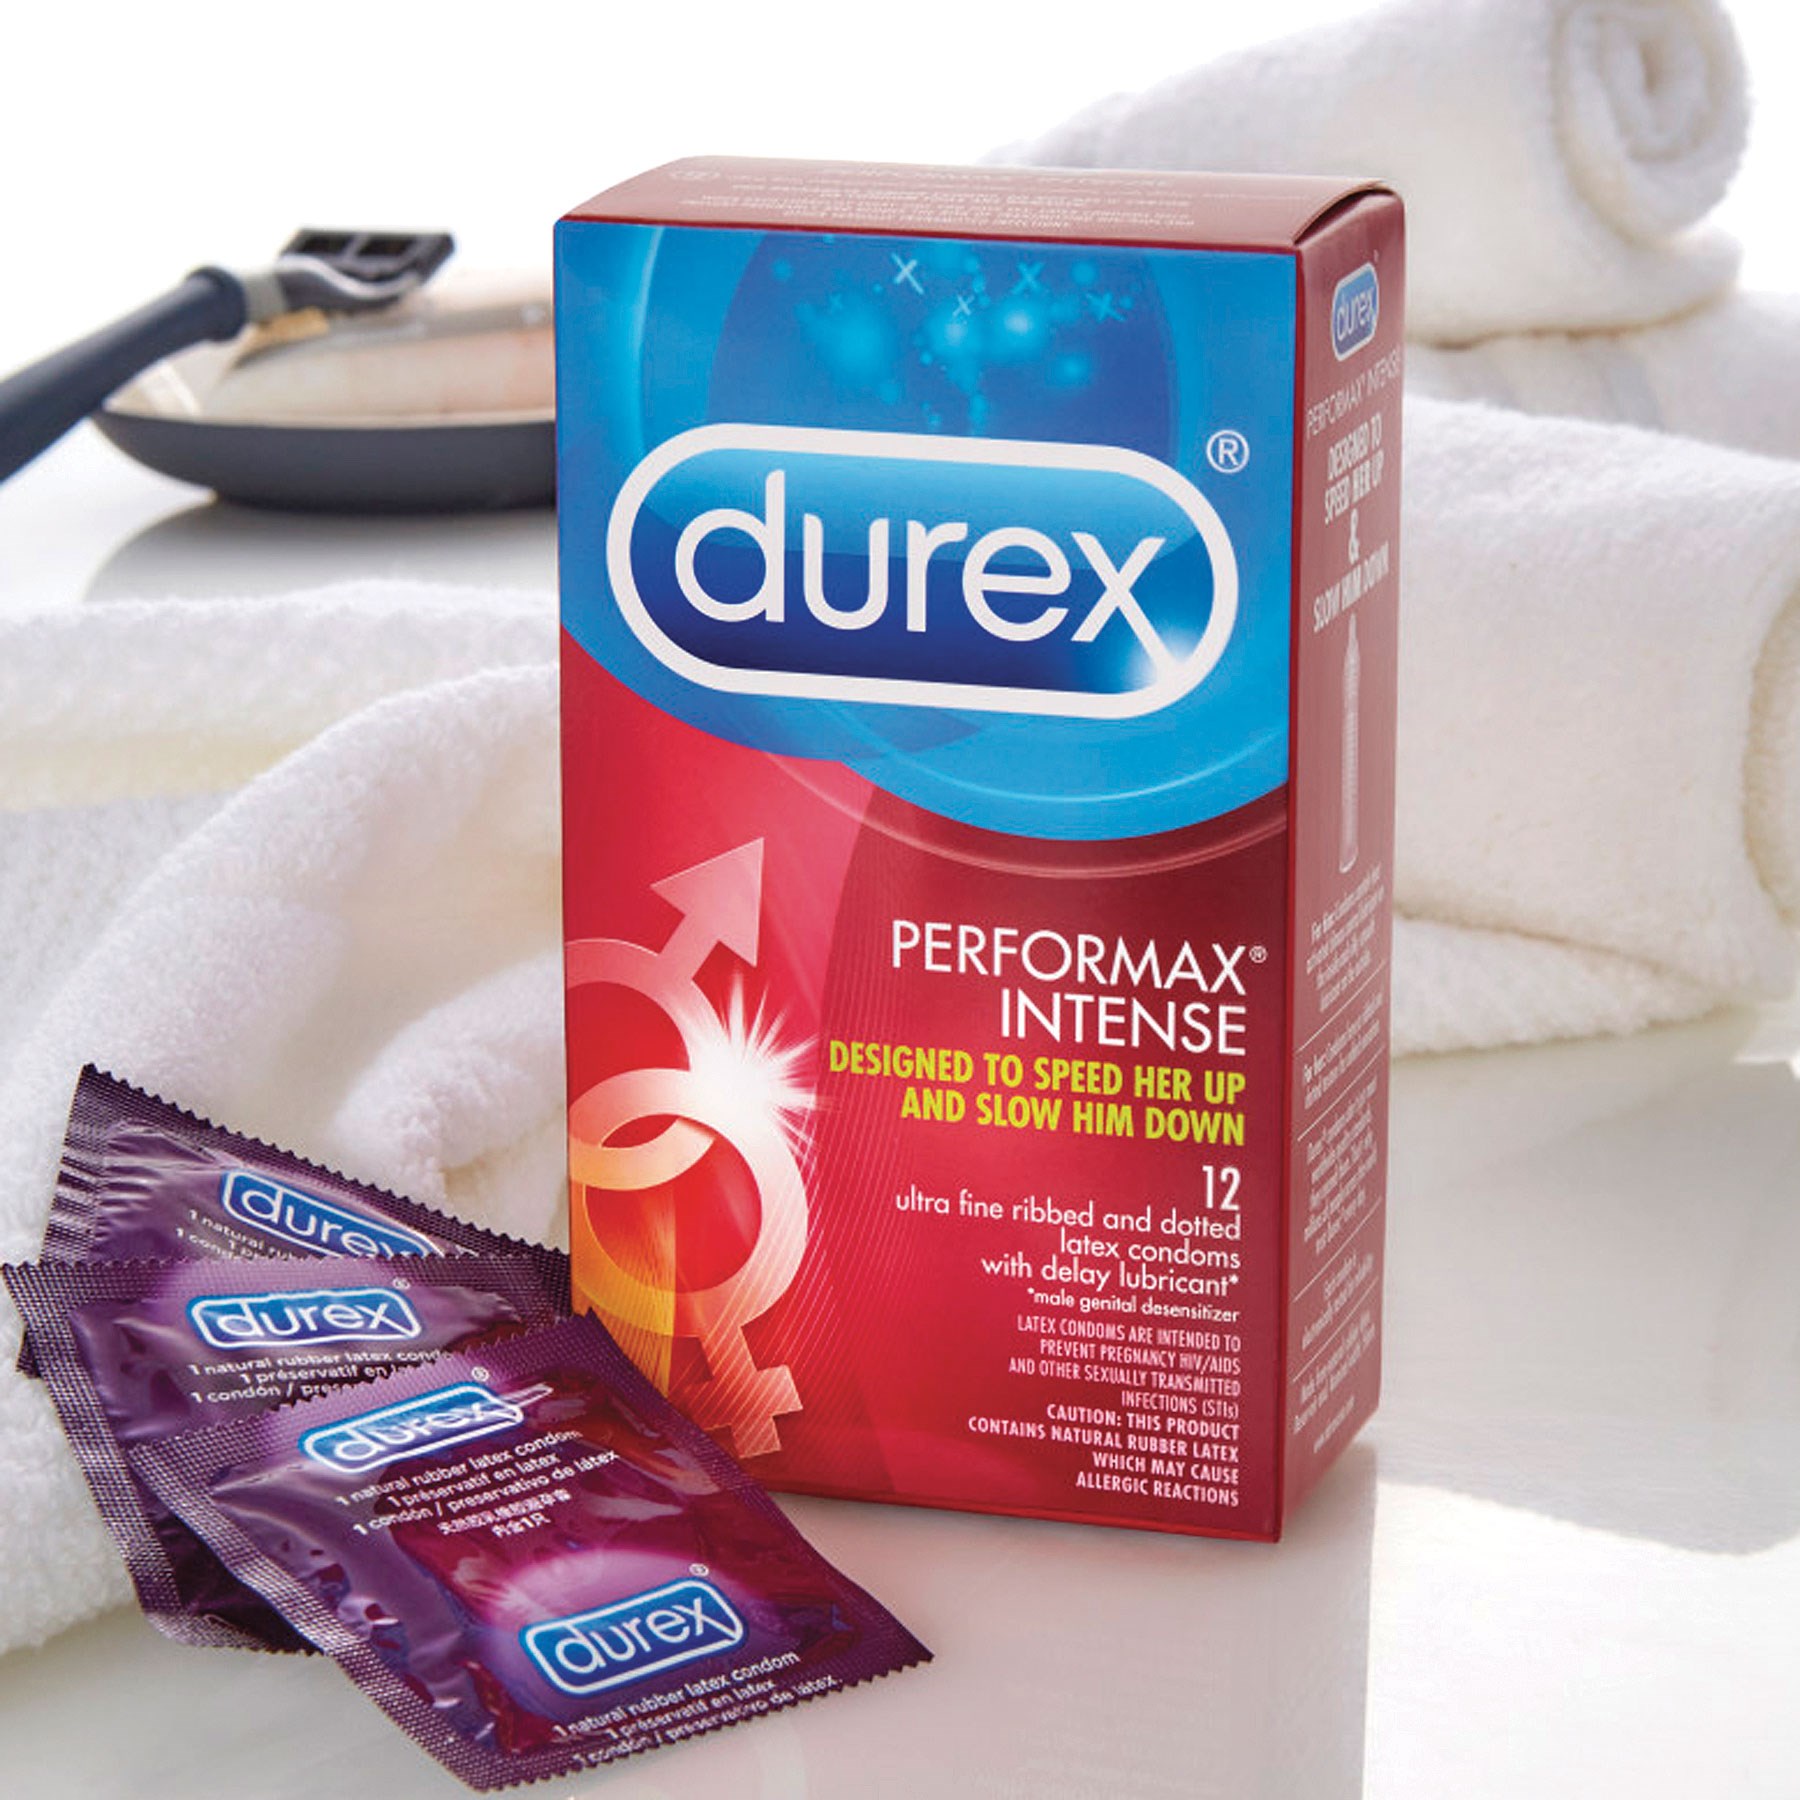 Durex Performax Intense Condom pack